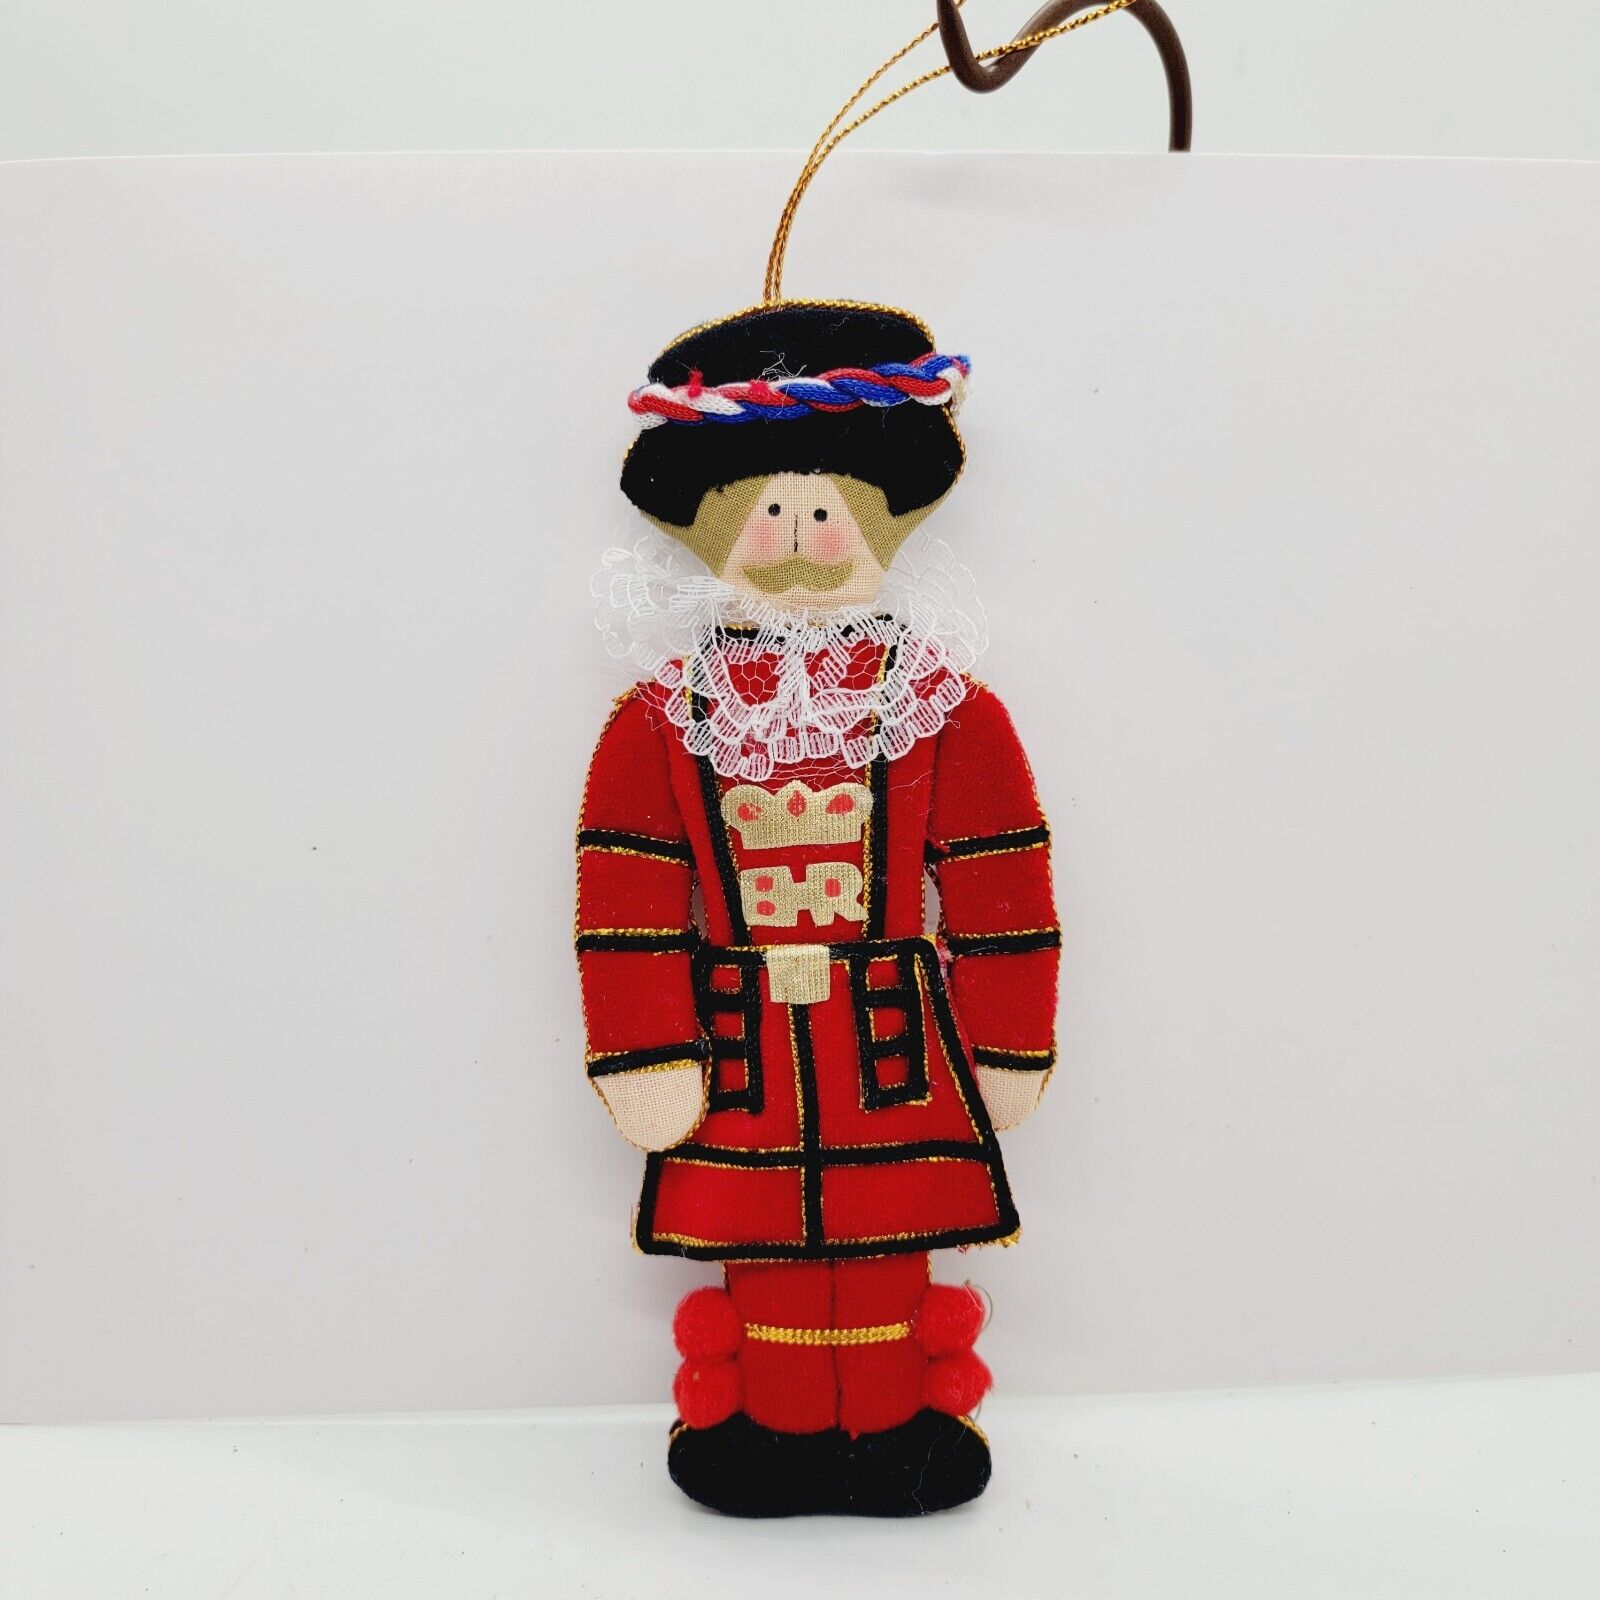 Vintage Plush Brittish Beefeater Christmas Ornament By Saint Nicholas 